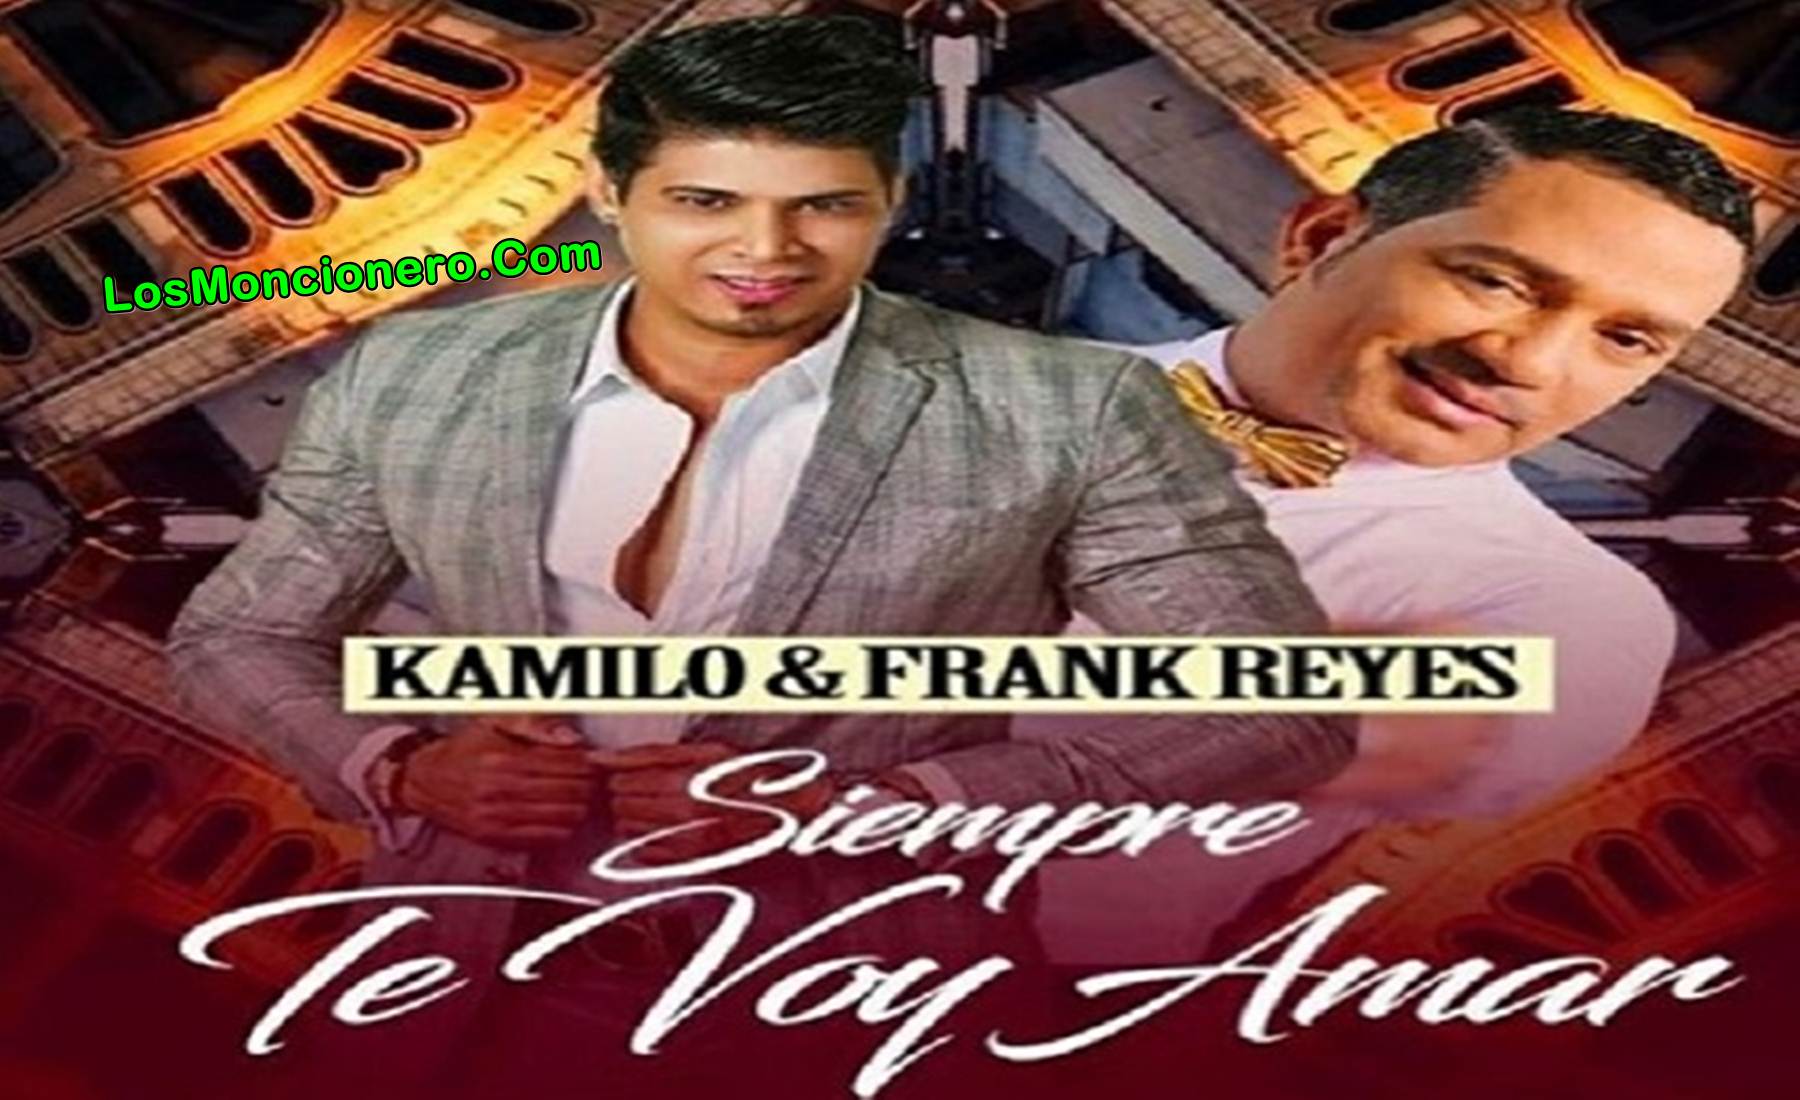 Frank Reyes Ft Kamilo - Siempre Voy Amar (2017)